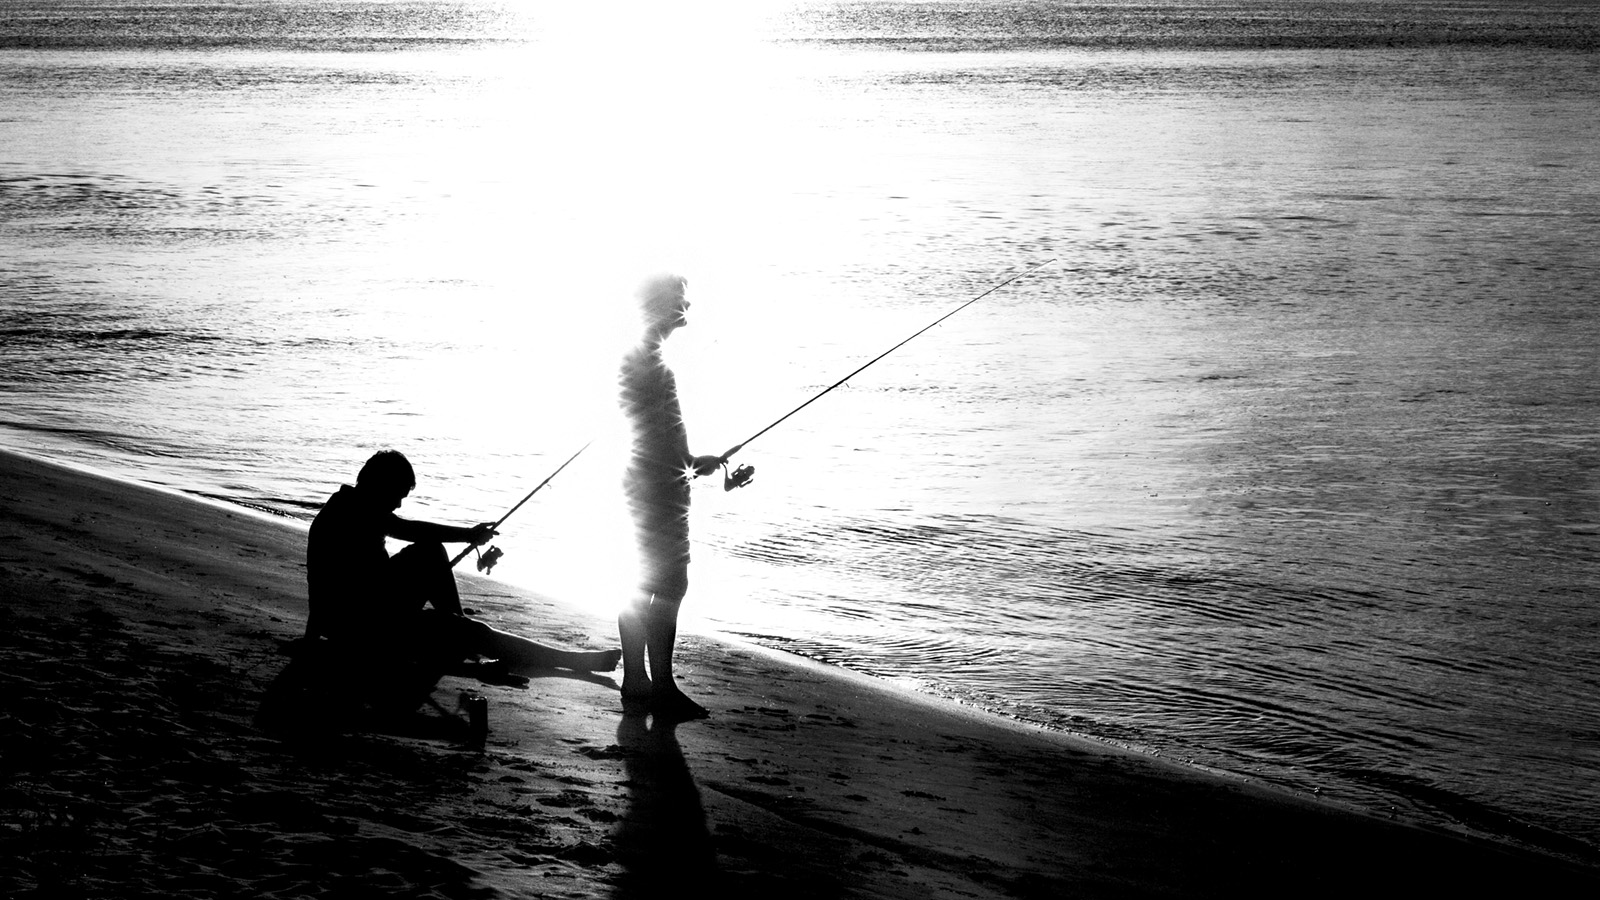 Fisherman or not ?